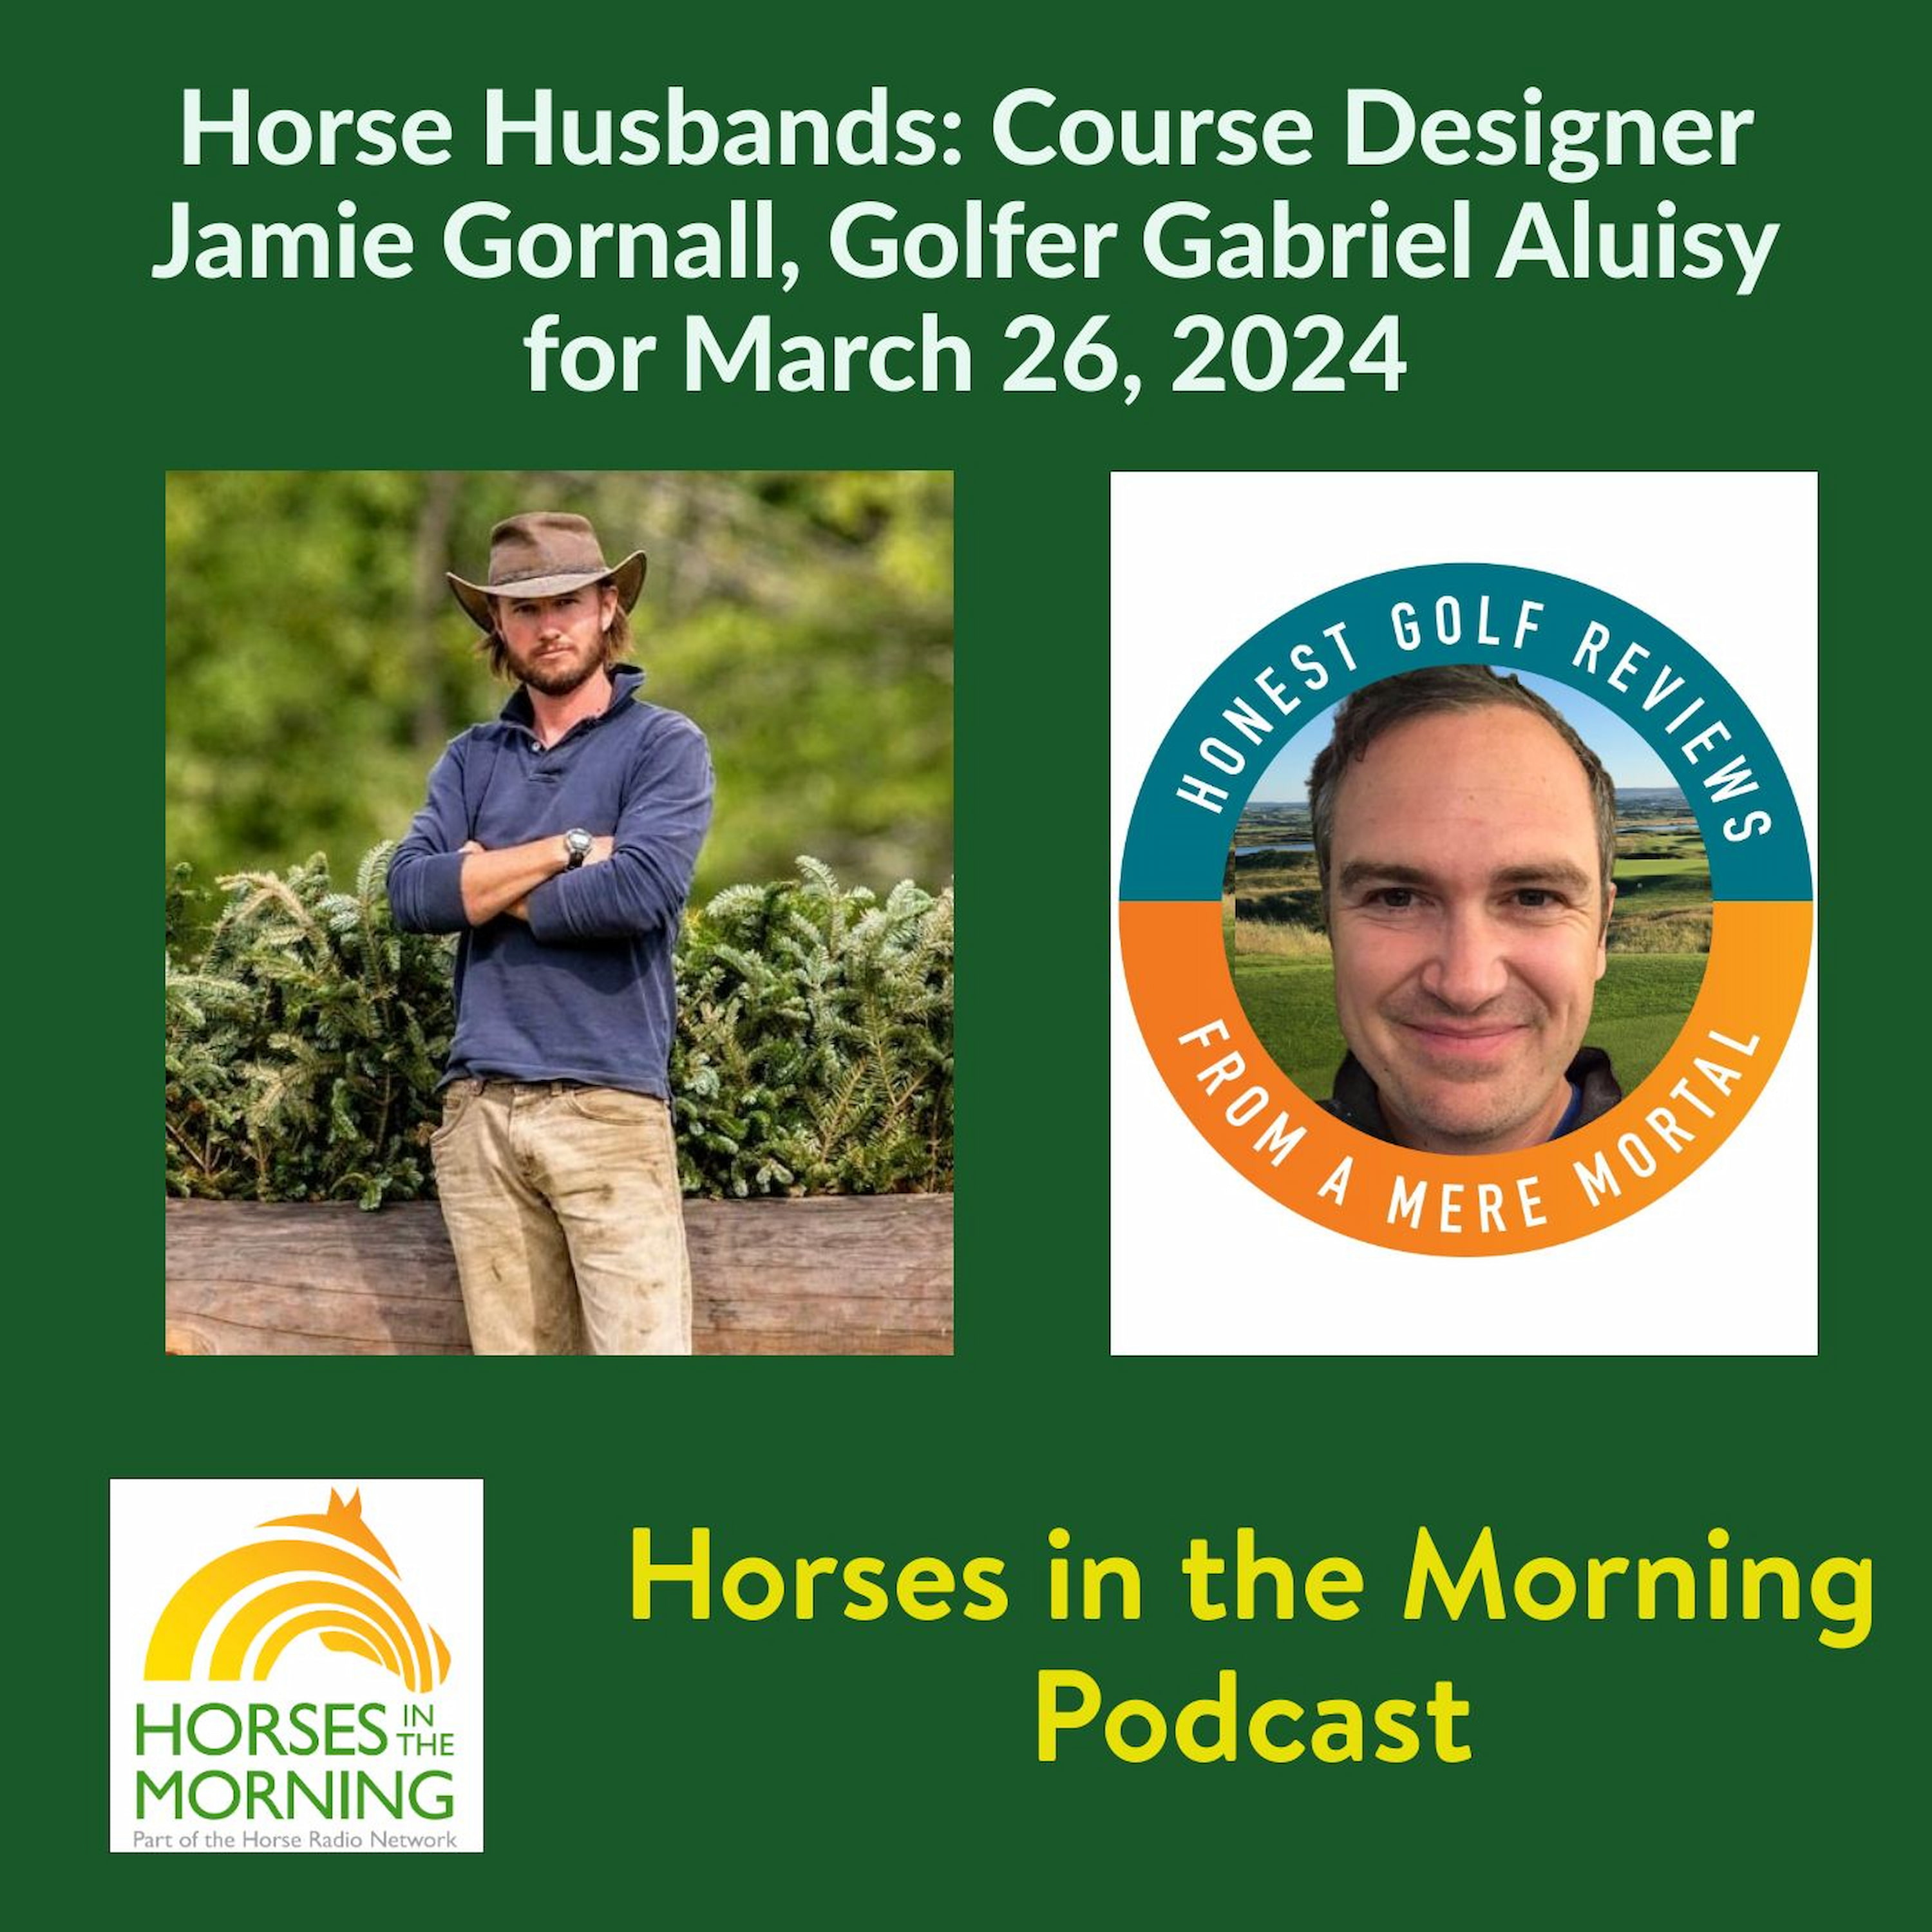 Horse Husbands: Course Designer Jamie Gornall, Golfer Gabe Aluisy for March 28, 2024 - HORSES IN THE MORNING